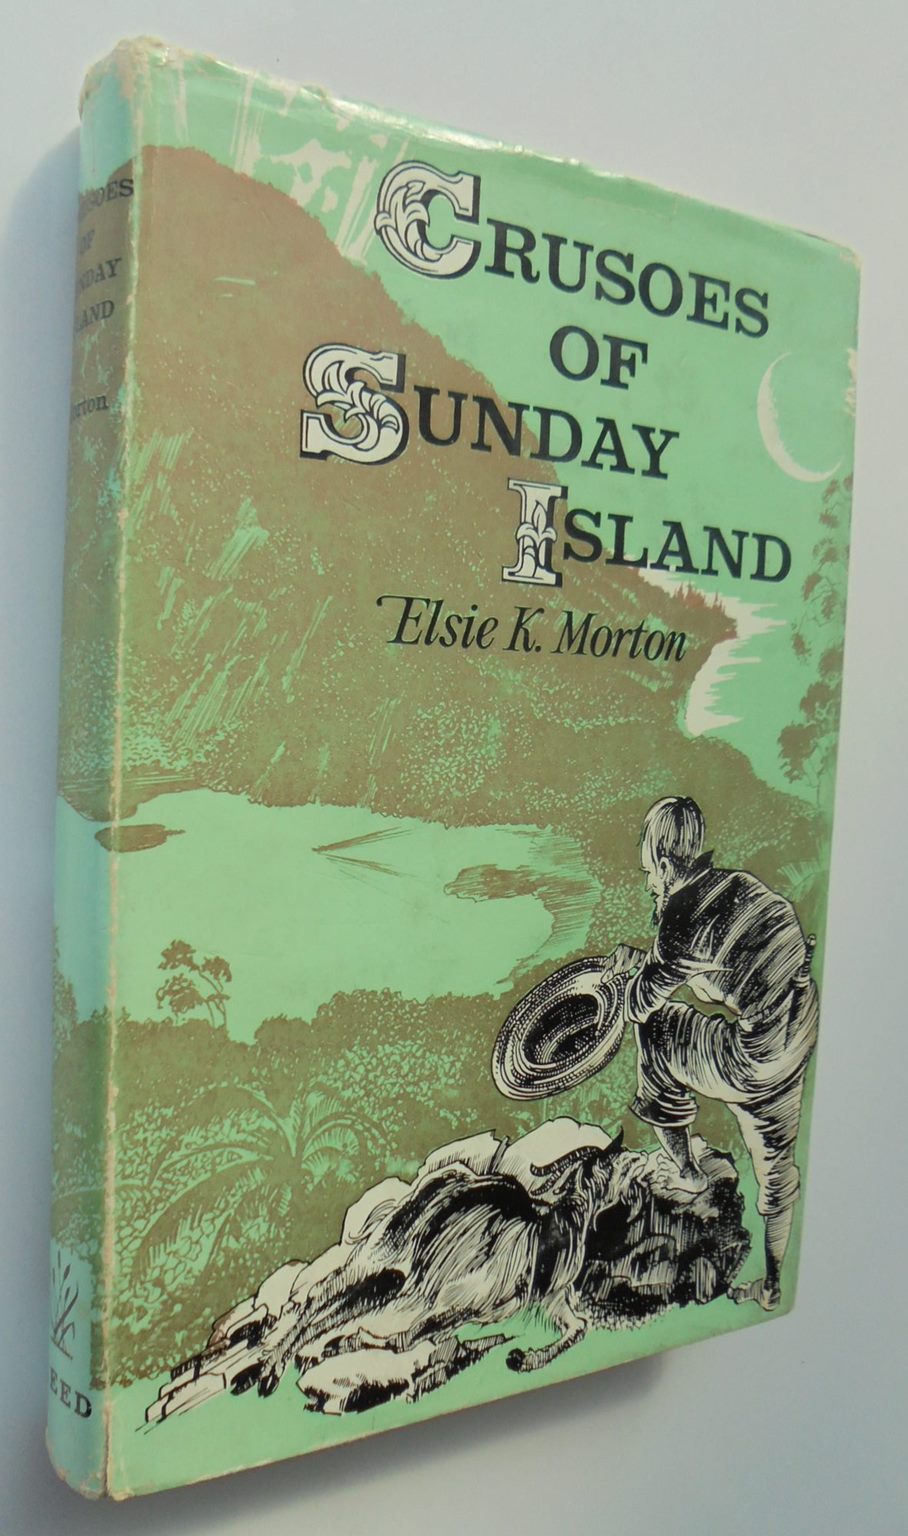 Crusoes of Sunday Island by Crusoes of Sunday Island – Phoenix Books NZ